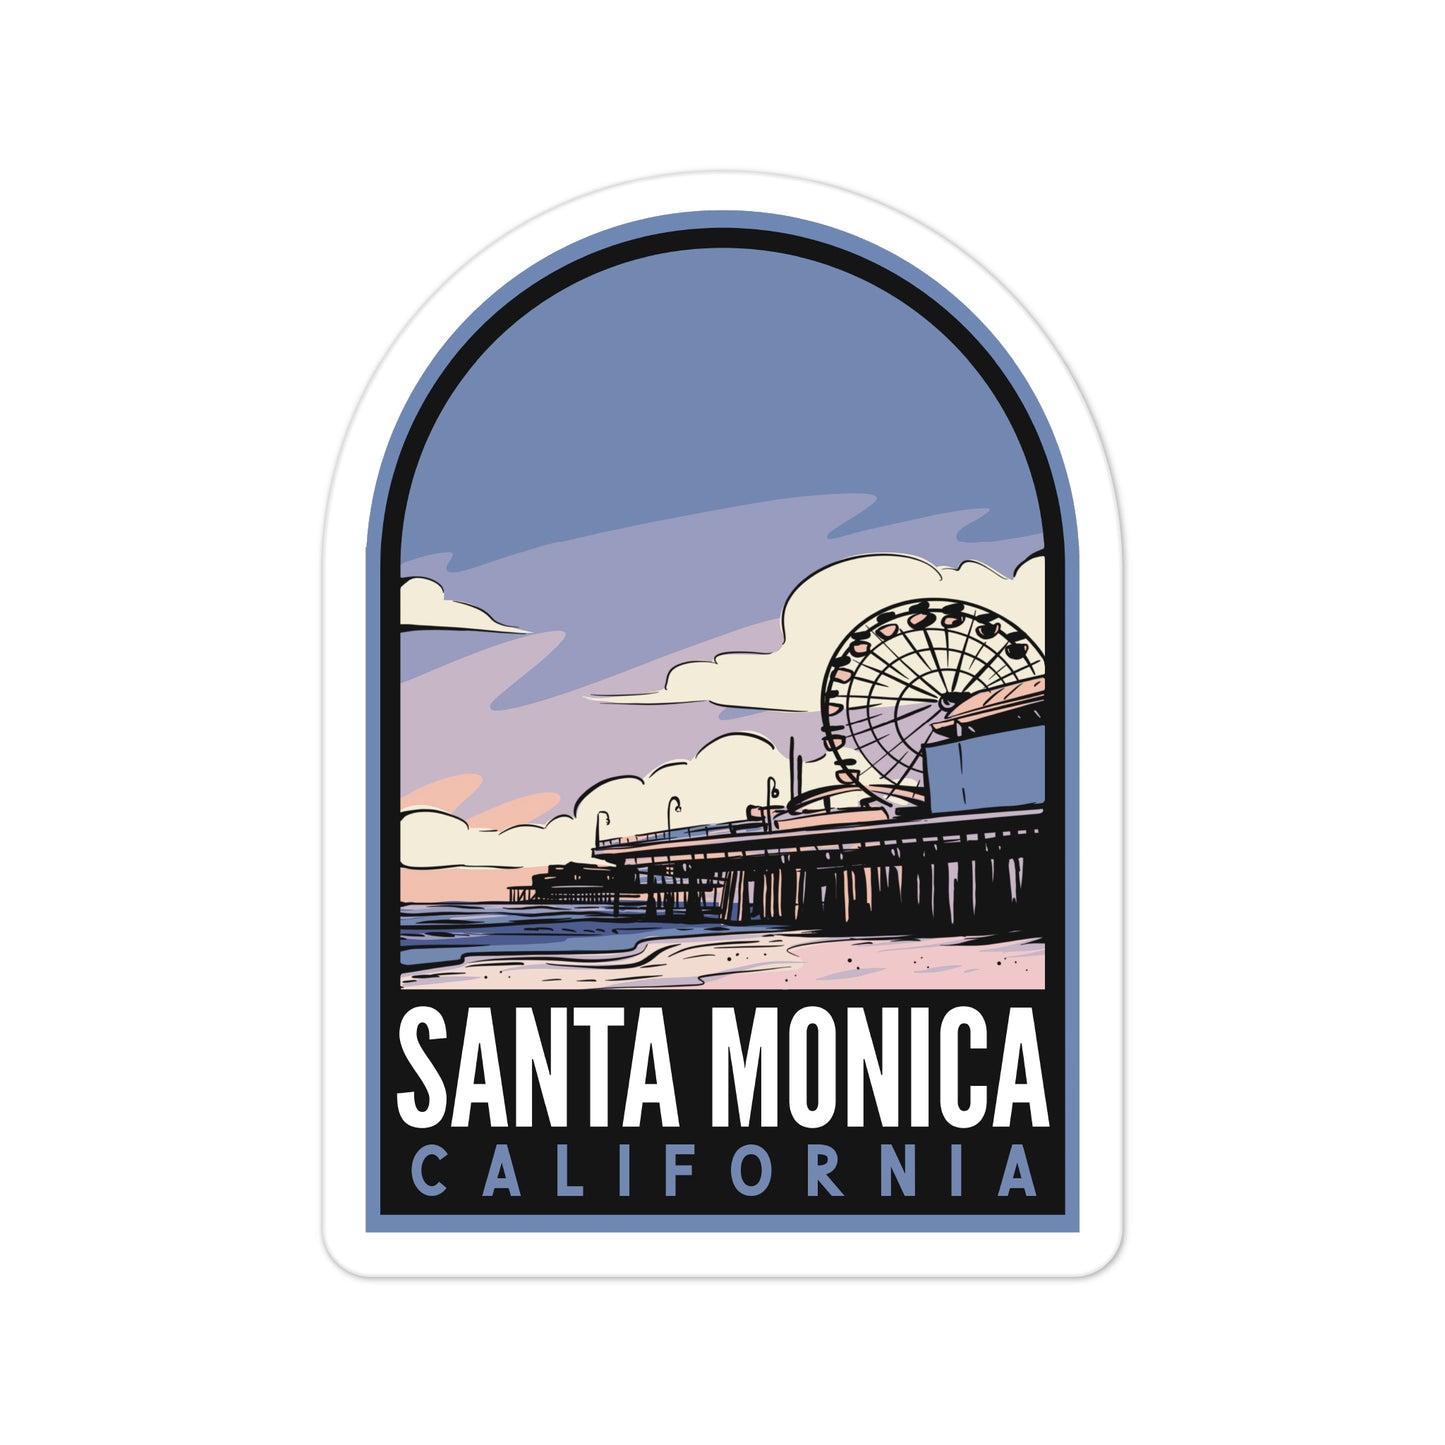 A sticker of Santa Monic California